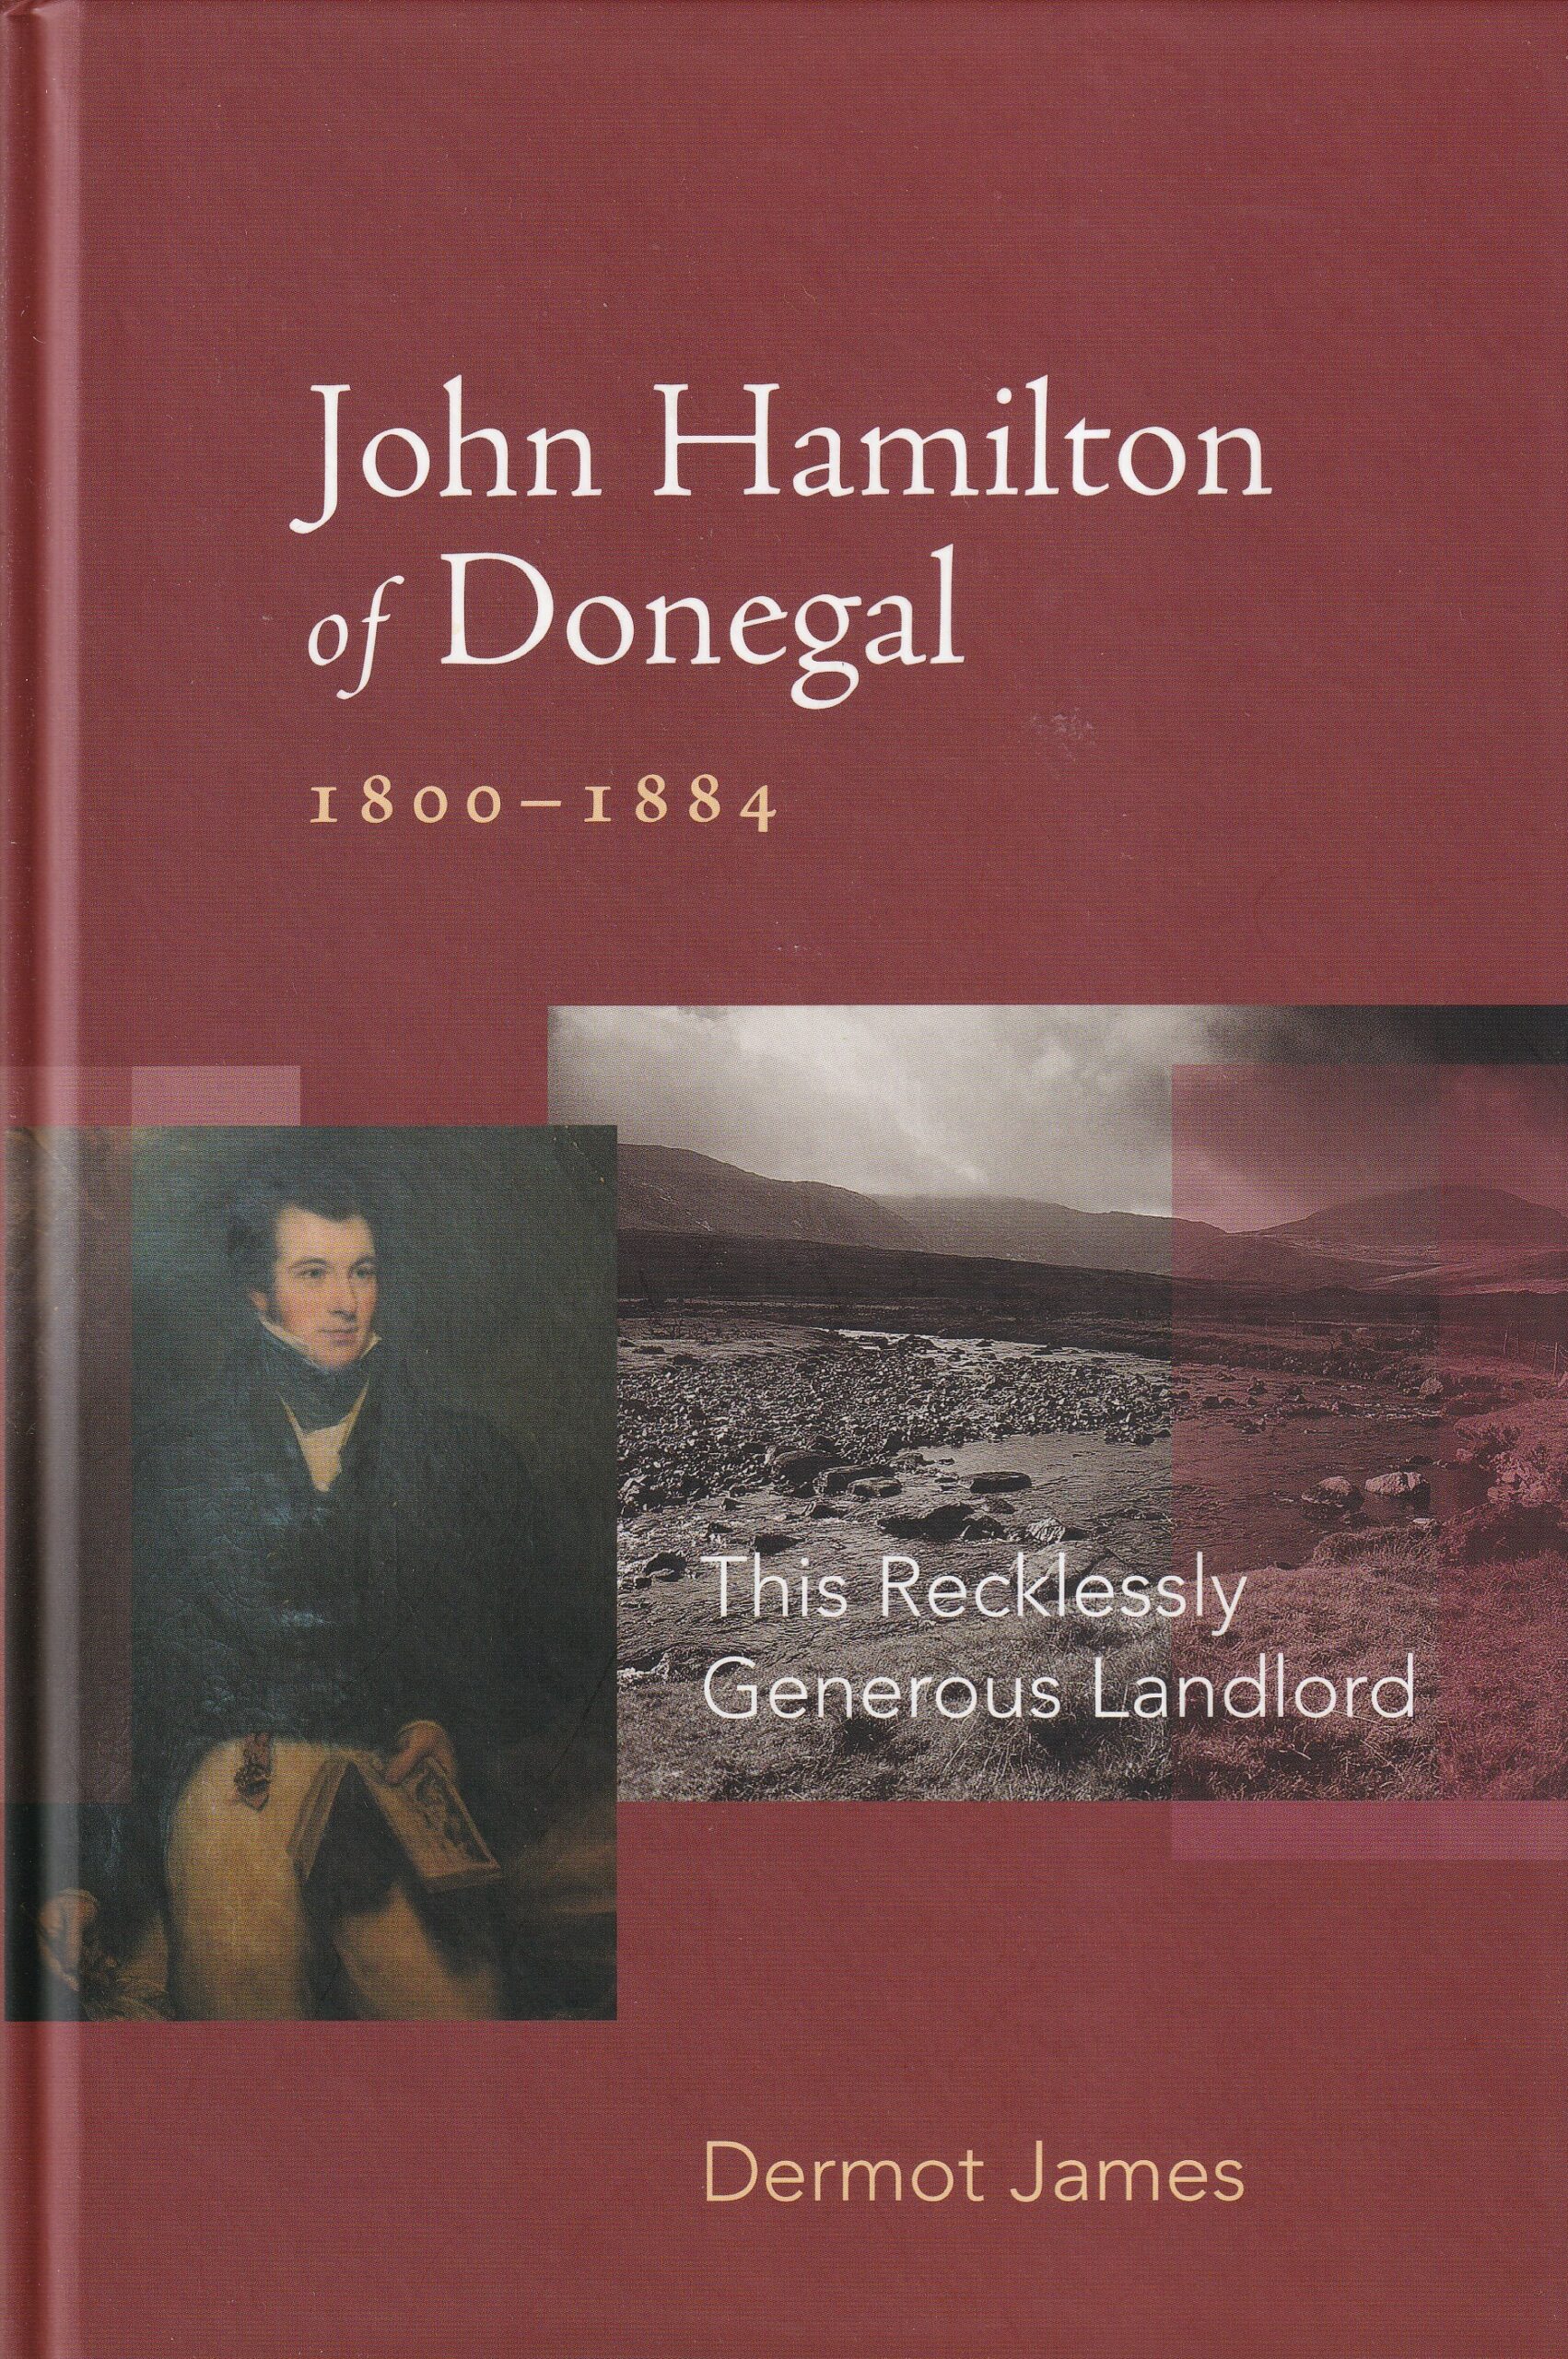 John Hamilton of Donegal 1800-1884: This Recklessly Generous Landlord | Dermot James | Charlie Byrne's